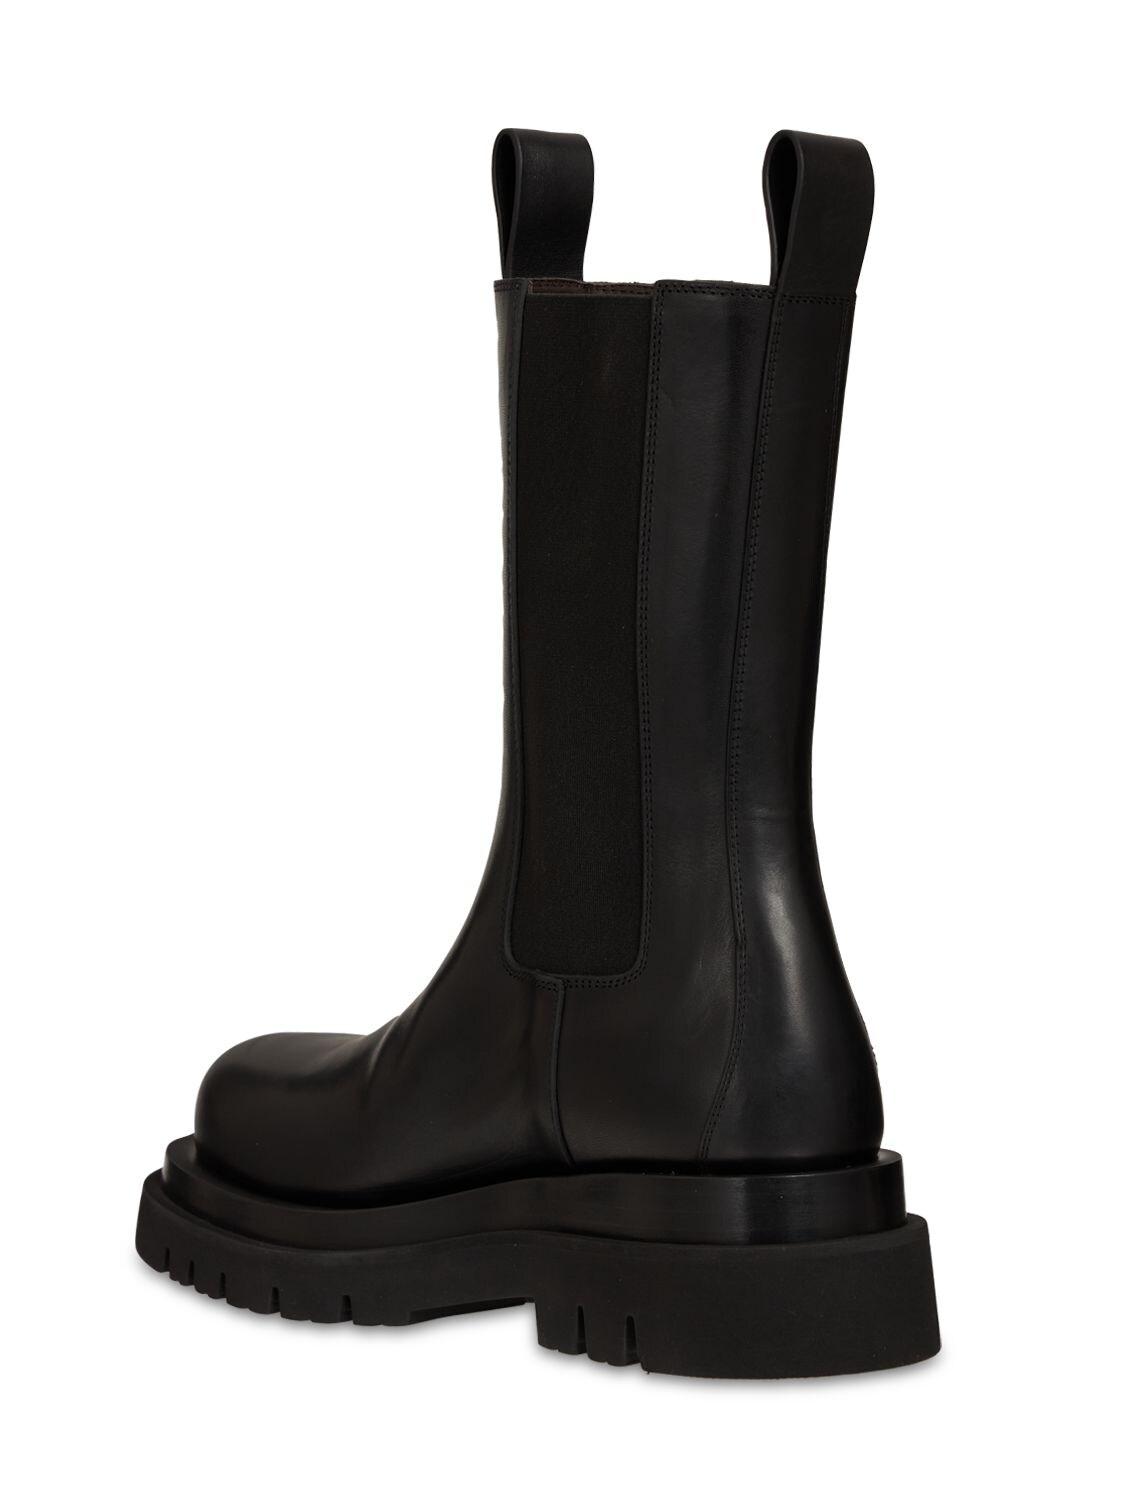 Bottega Veneta Leather Chelsea Boots in Black - Save 29% - Lyst